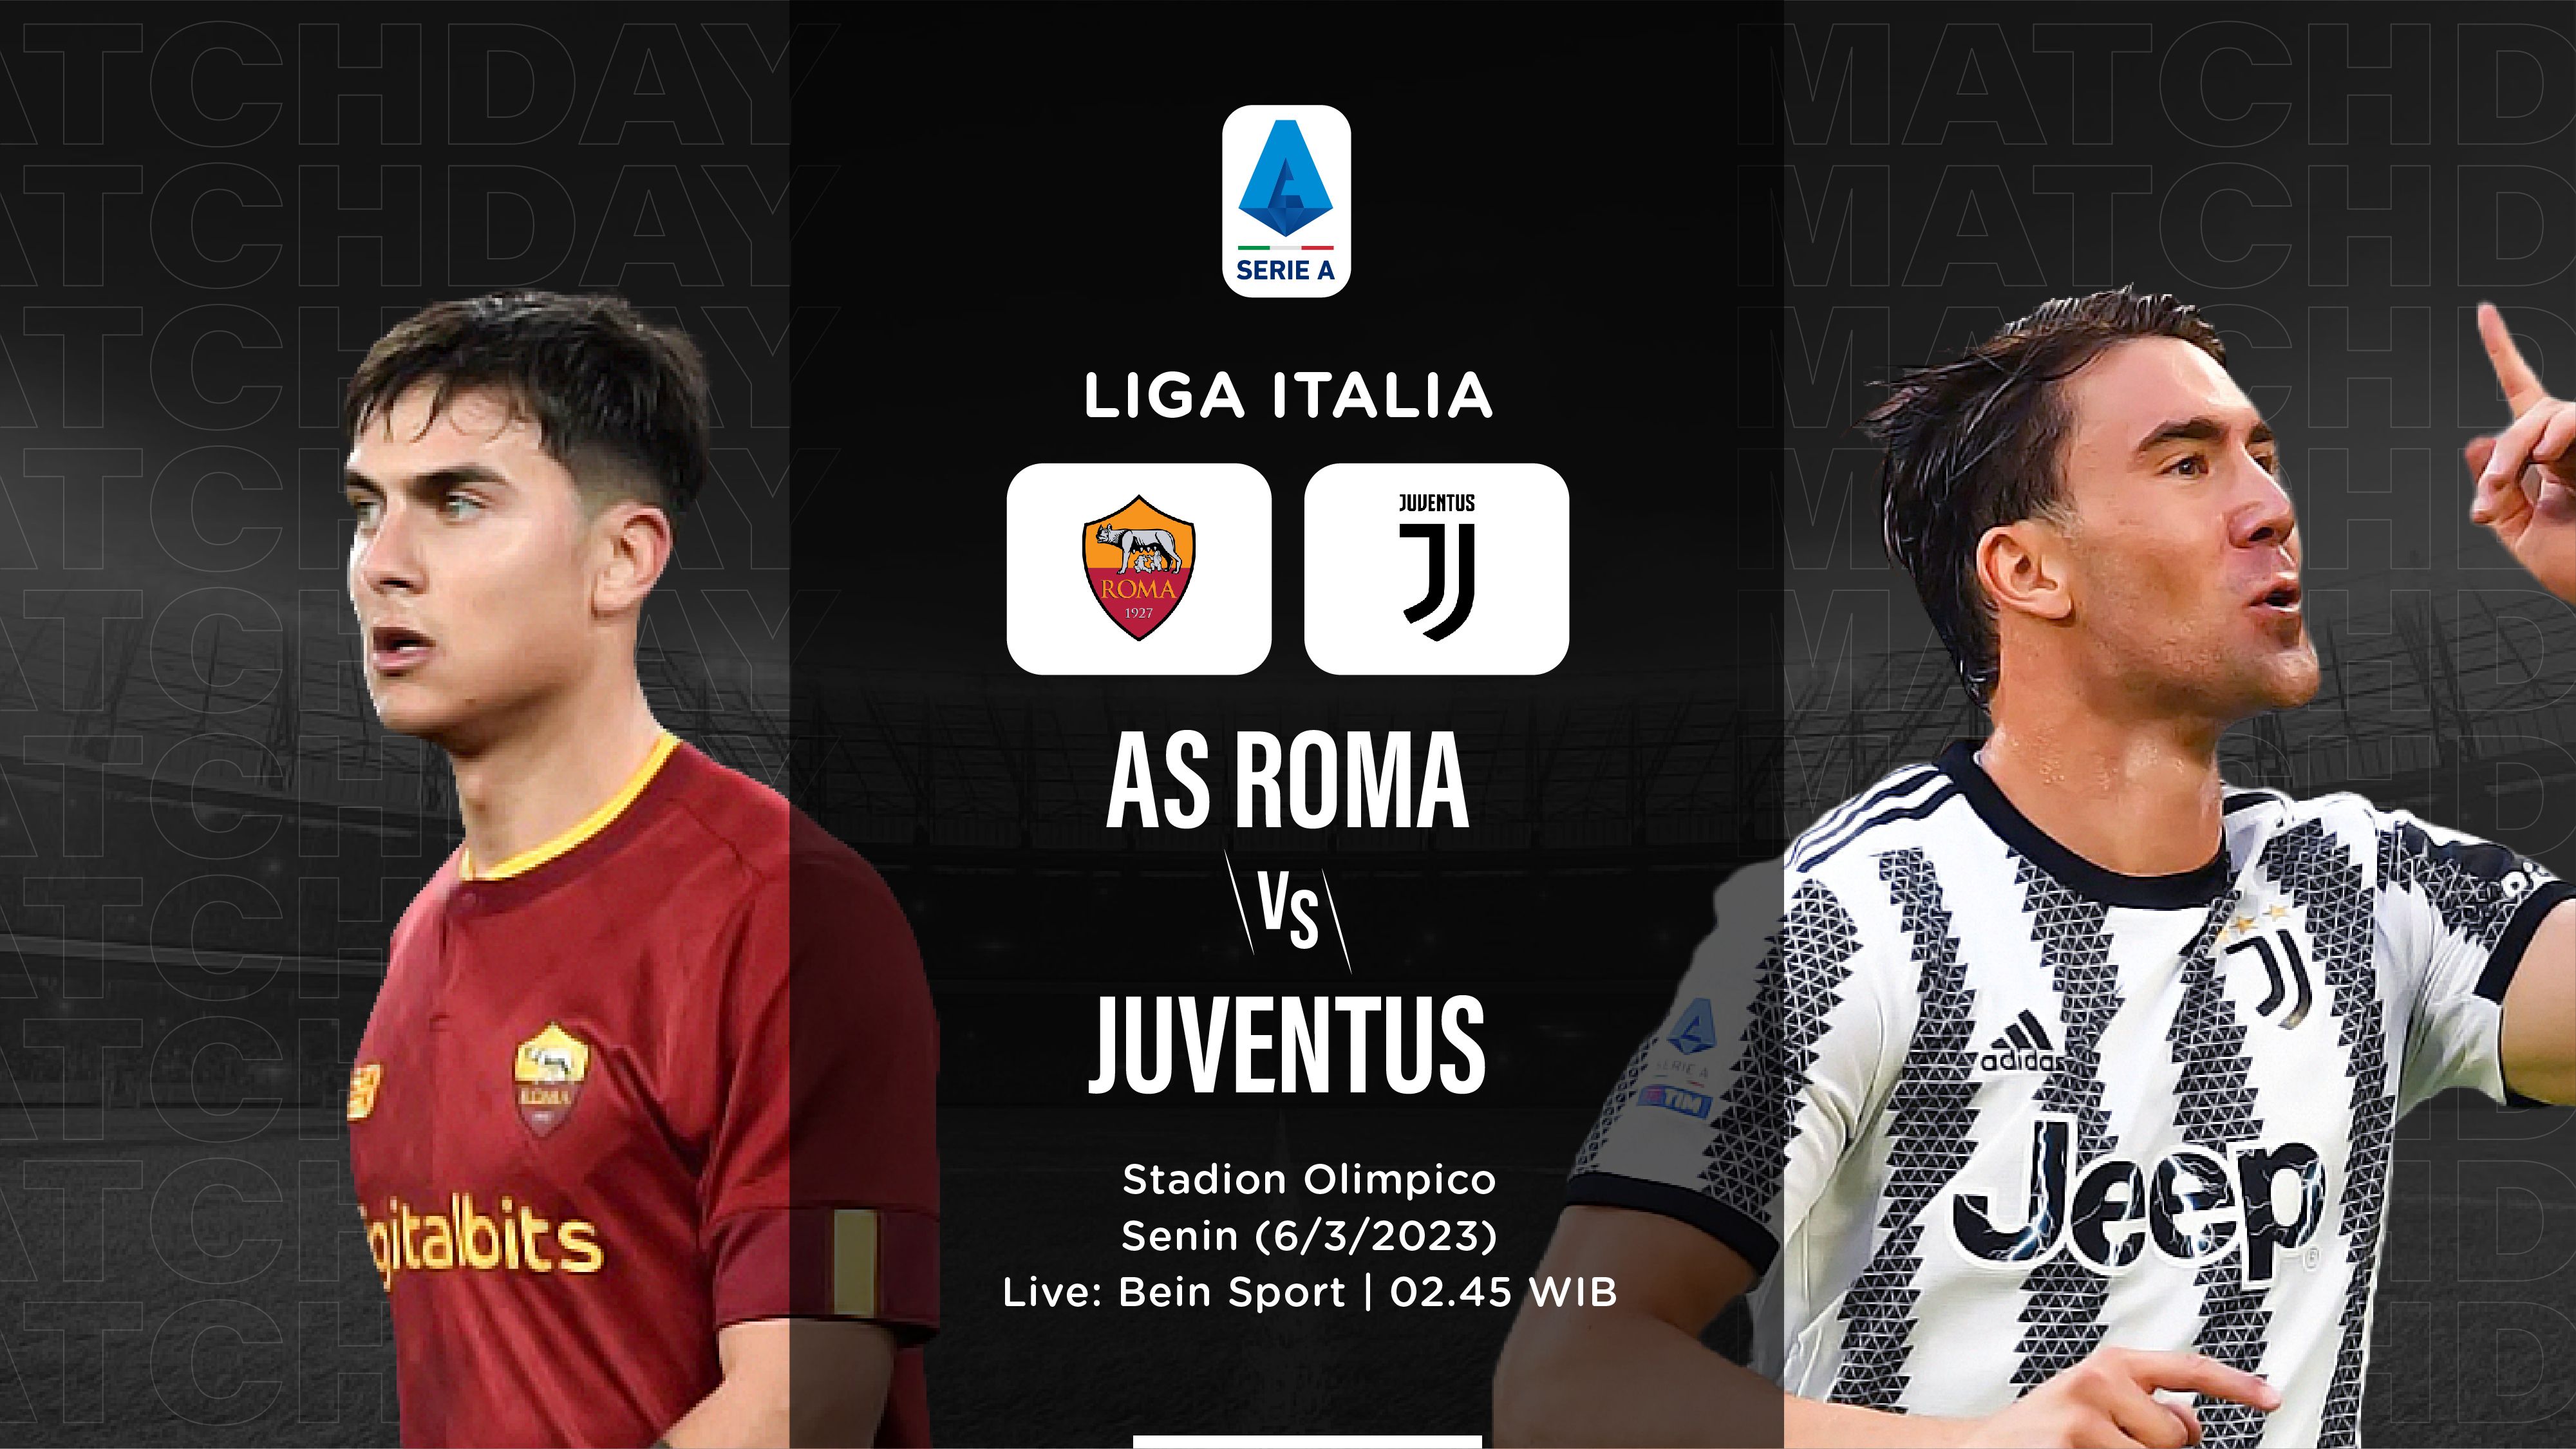 Paulo Dybala vs Dusan Vlahovic dalam laga AS Roma vs Juventus (Grafis: Hendy/Skor.id)